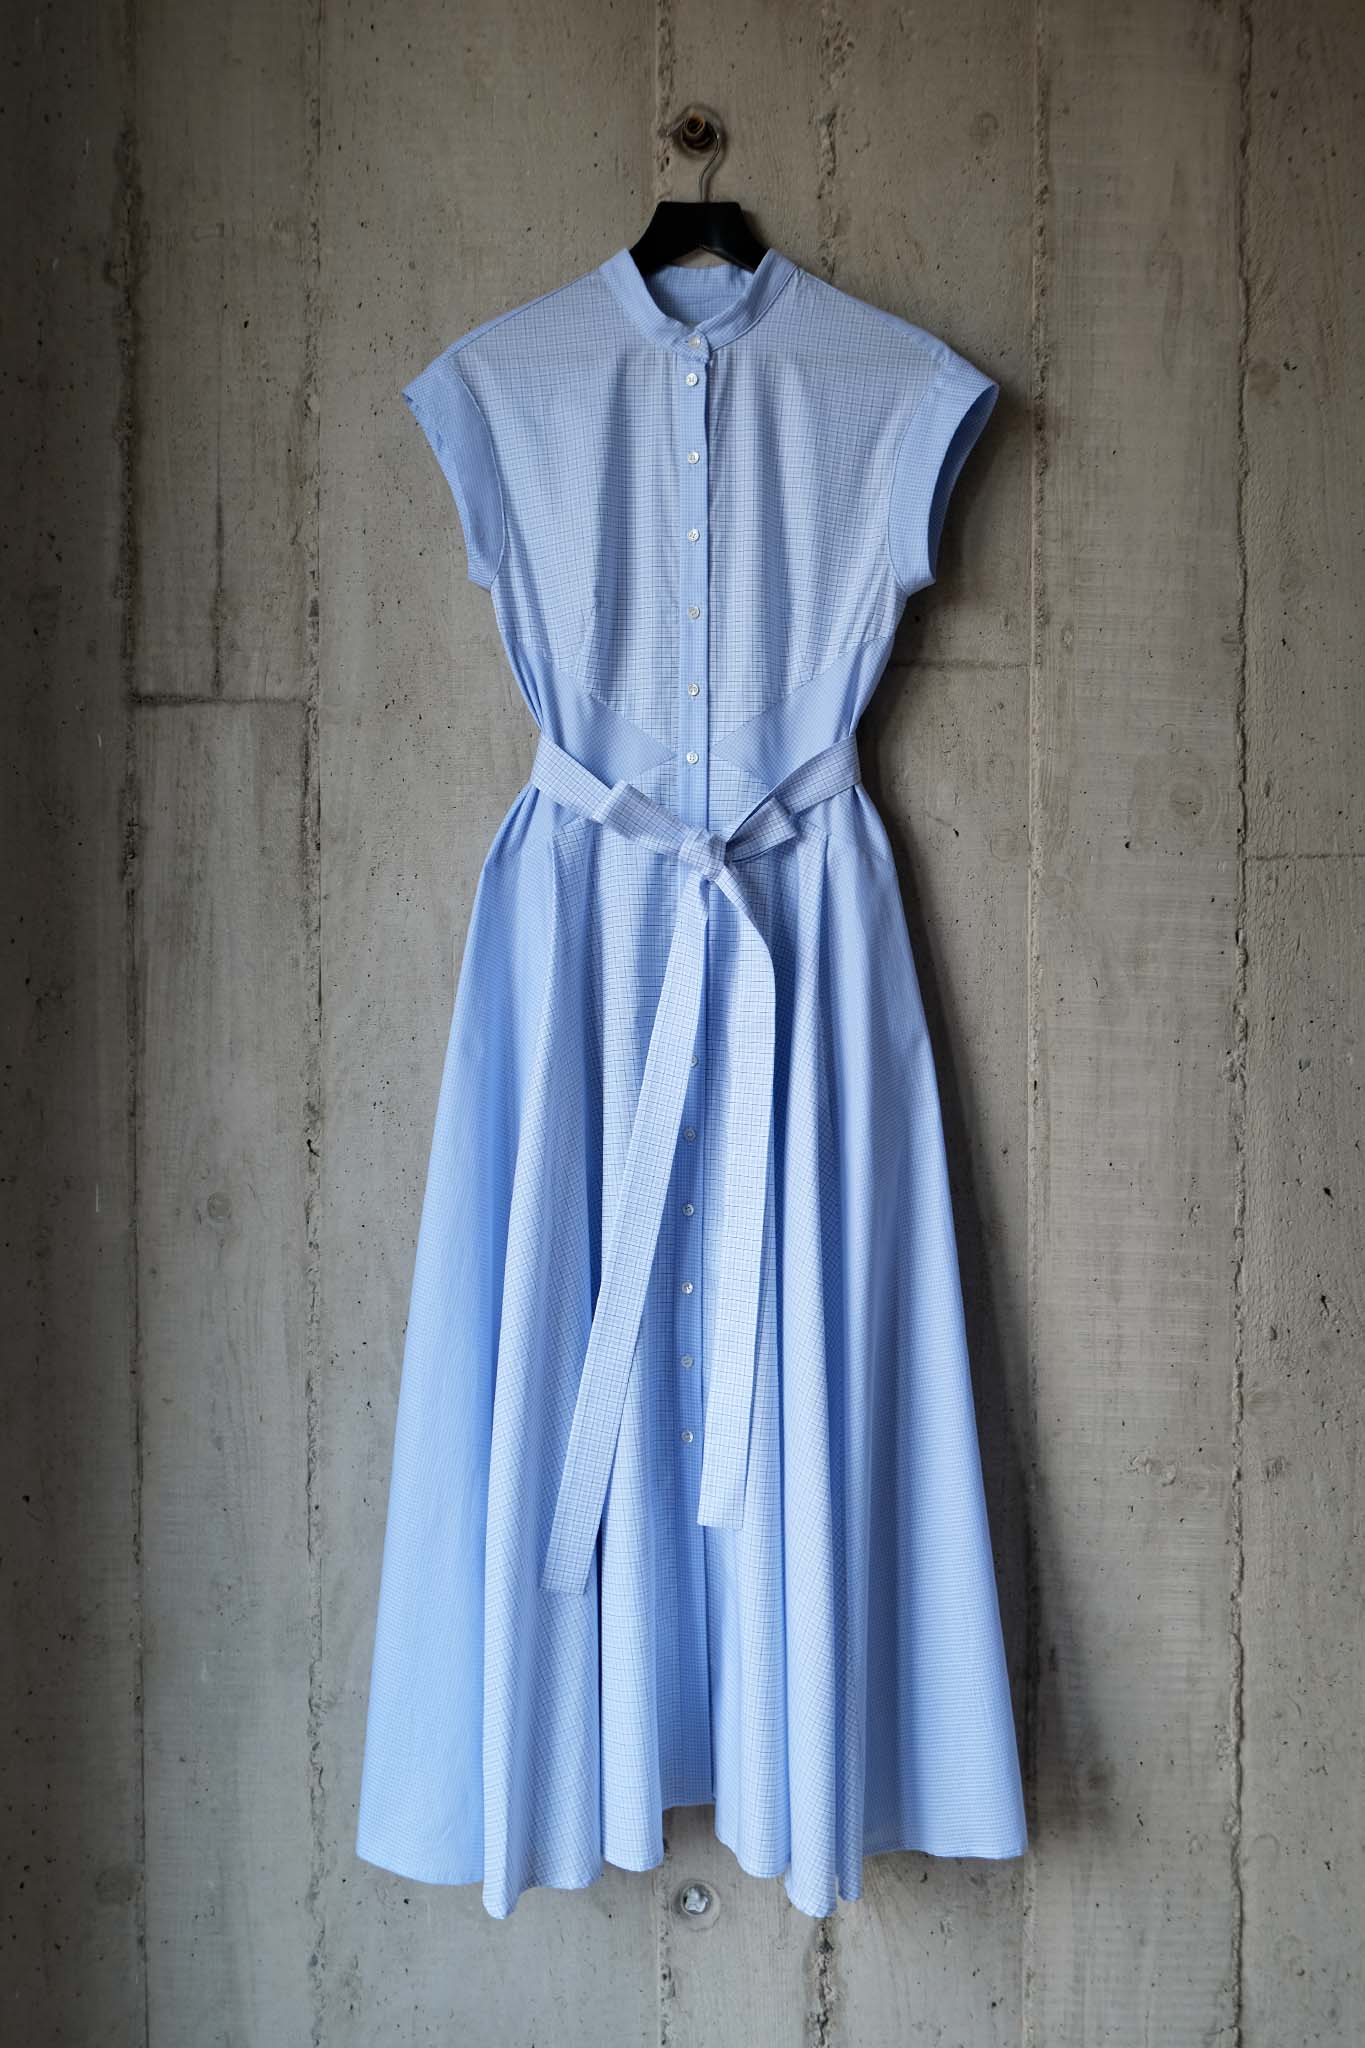 The Romanticist Cap Sleeve Shirt Dress in Light Blue Cotton Shirting